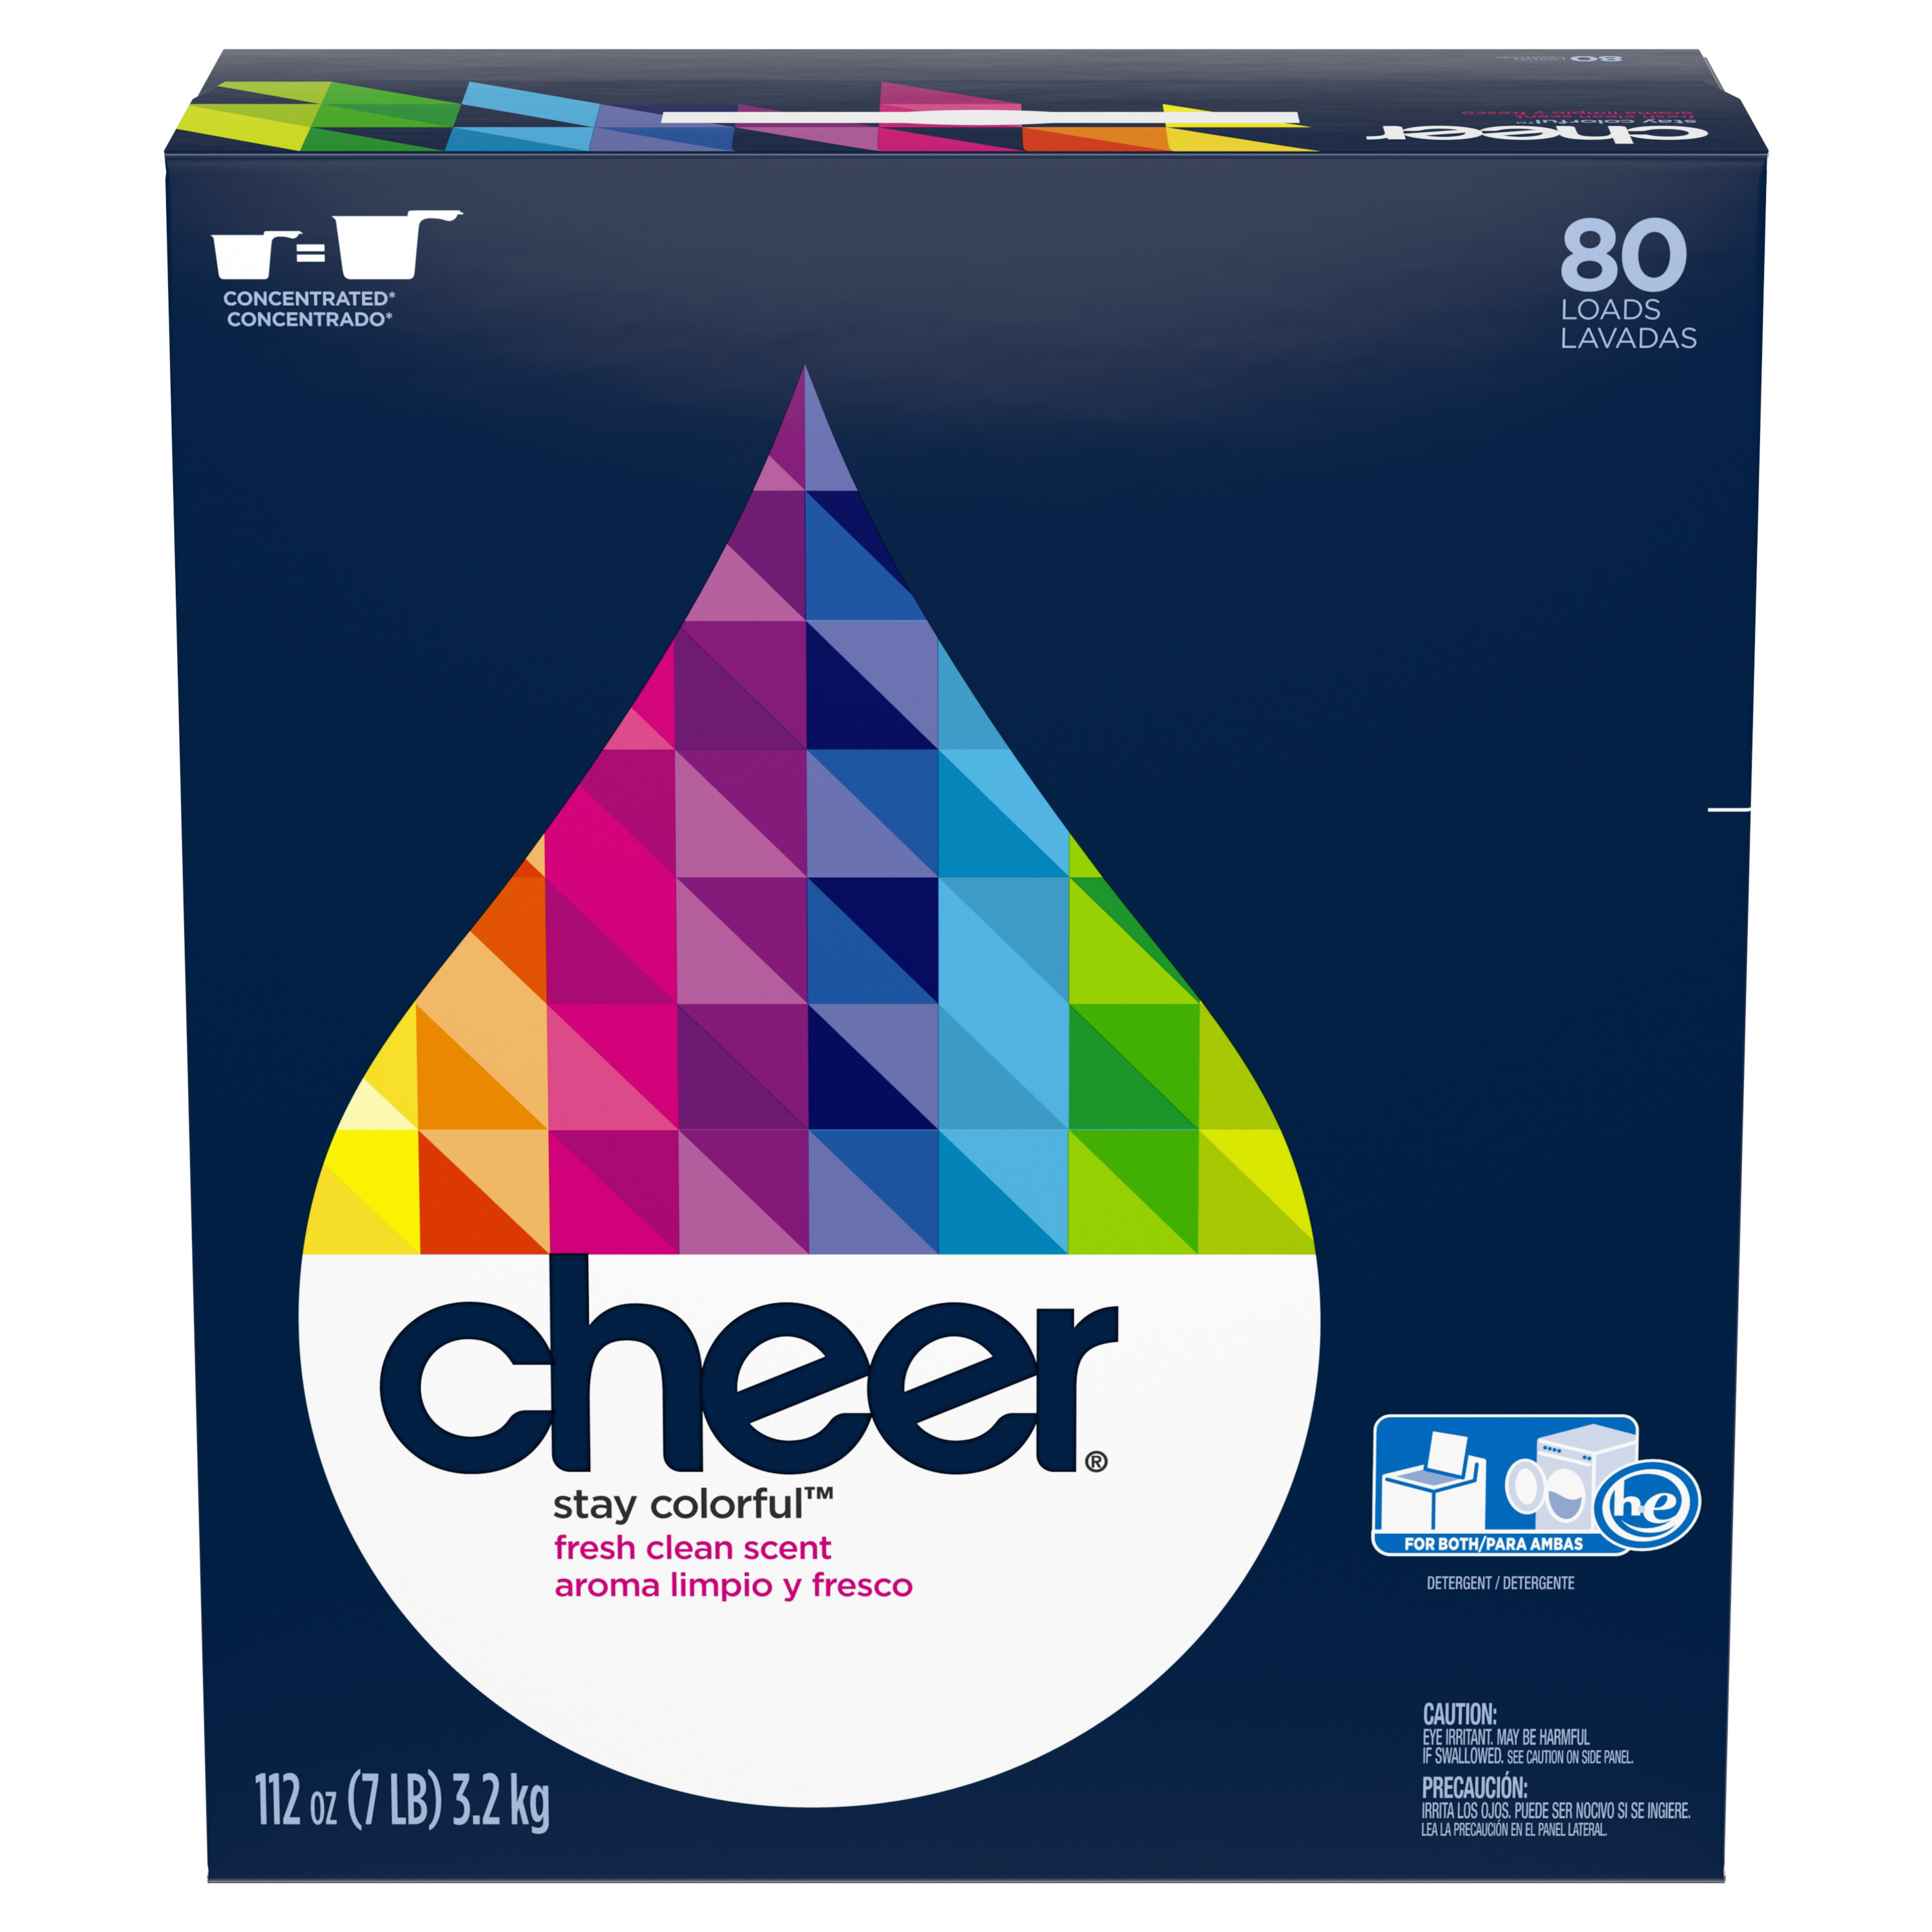 Cheer Powder Laundry Detergent, Fresh Clean, 80 Loads 112 oz - image 4 of 5